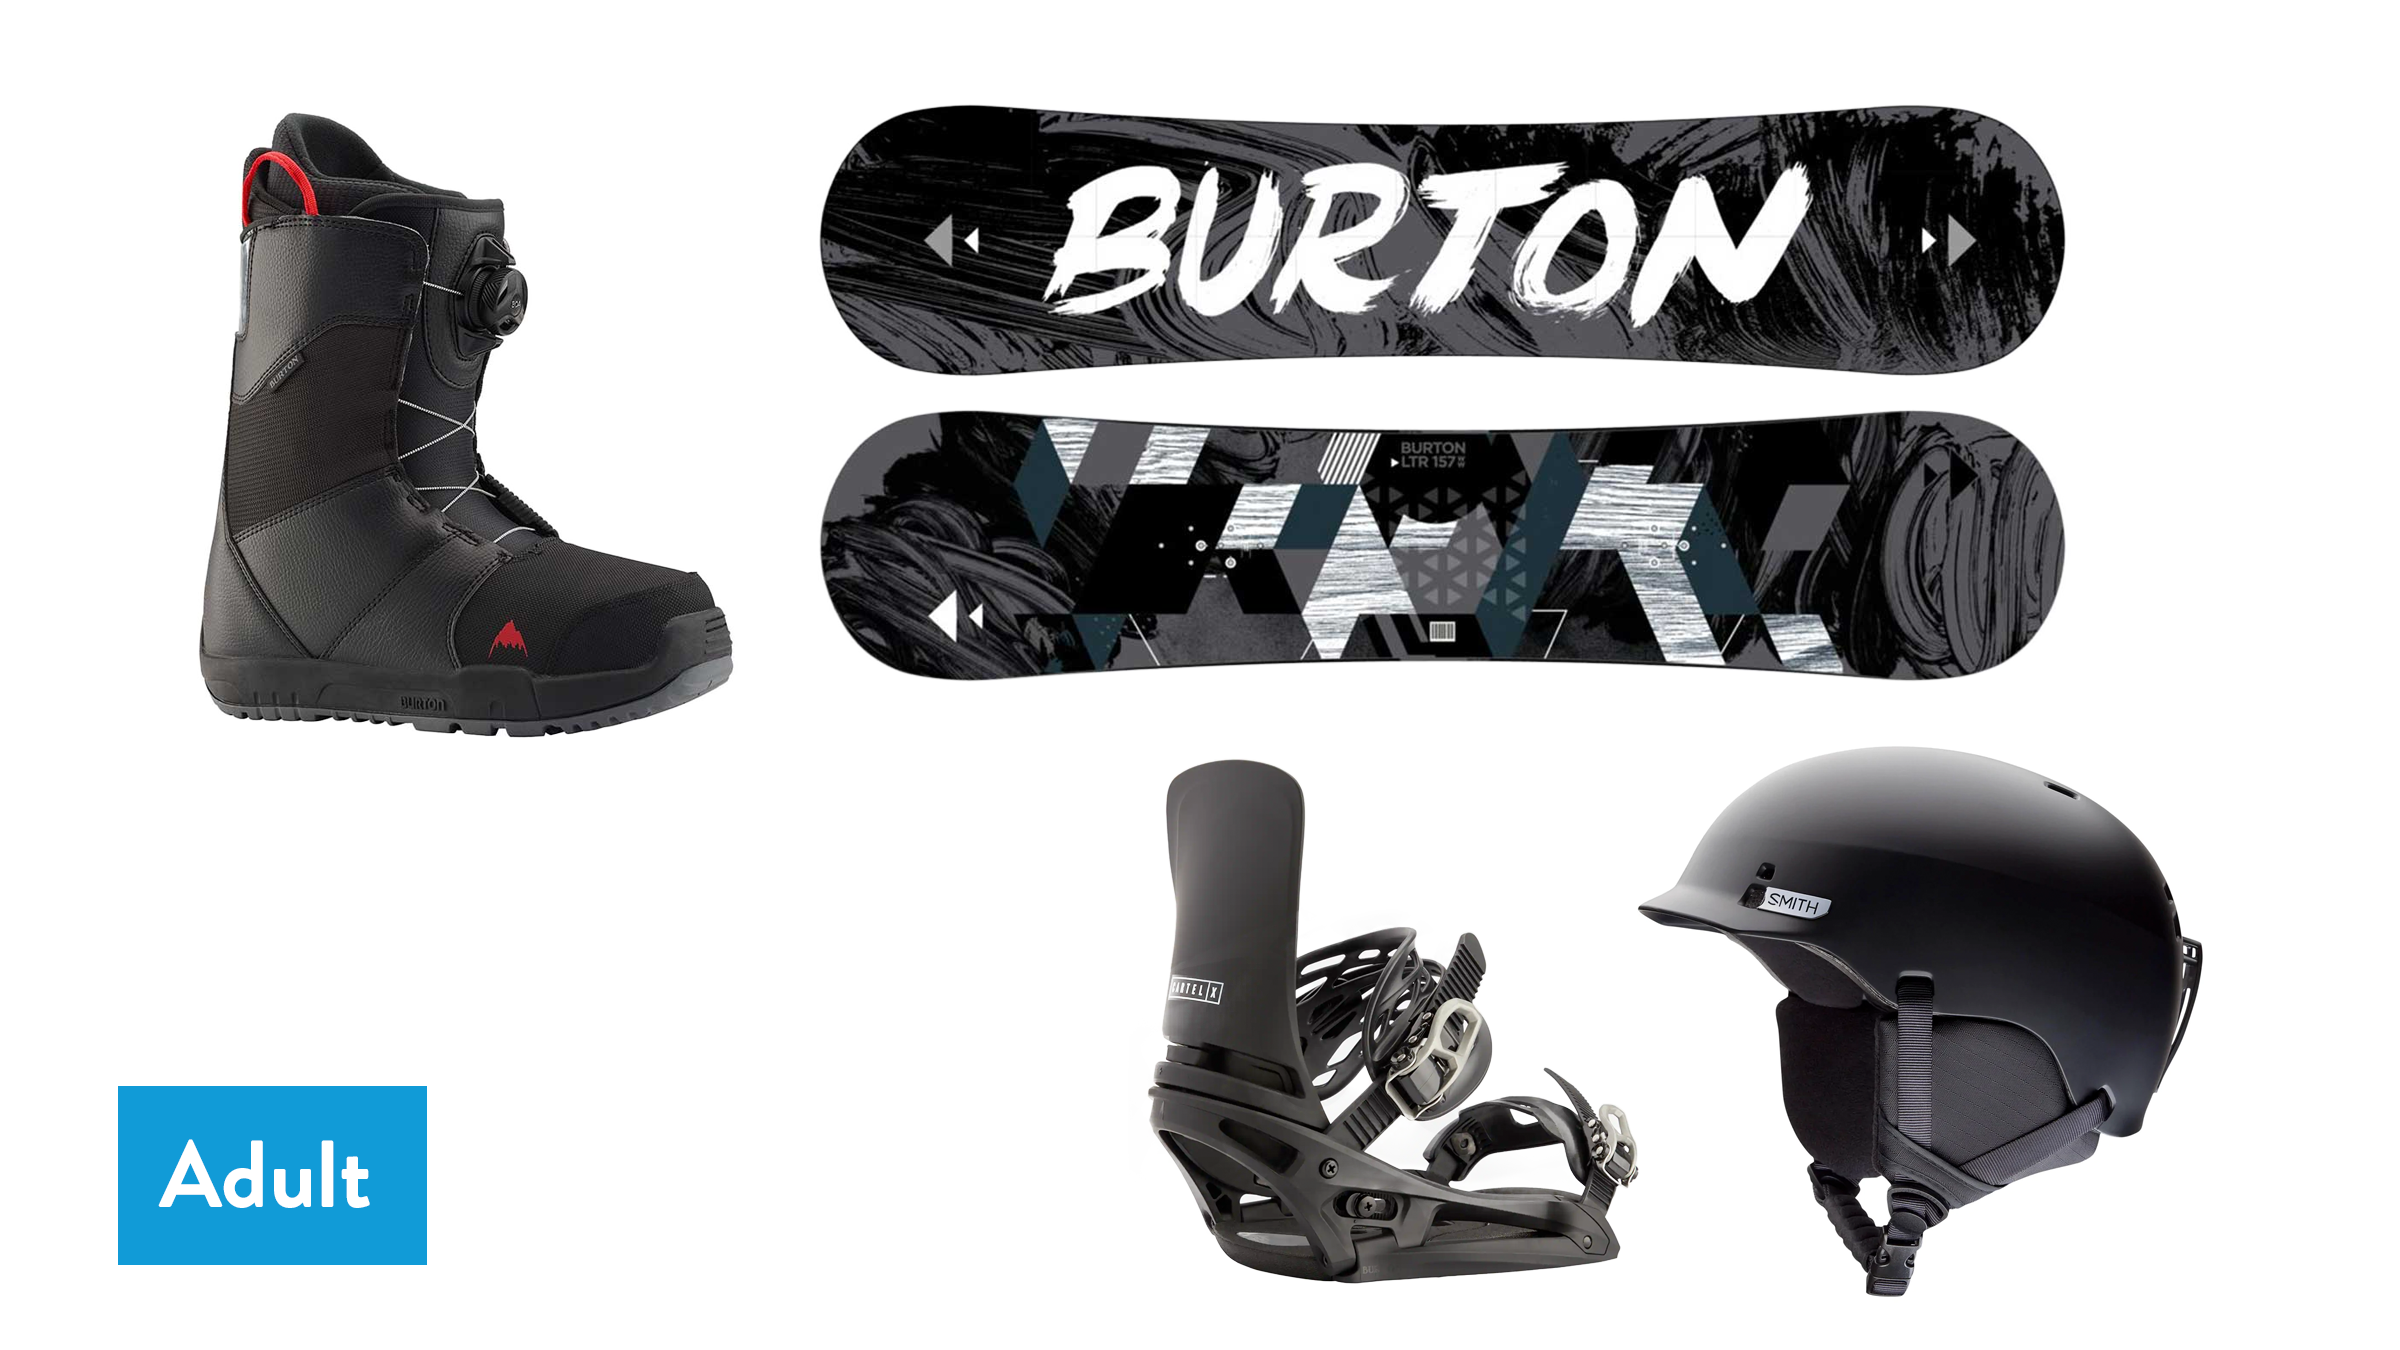 Lay flat of snowboard boots, Burton snowboard, bindings and helmet